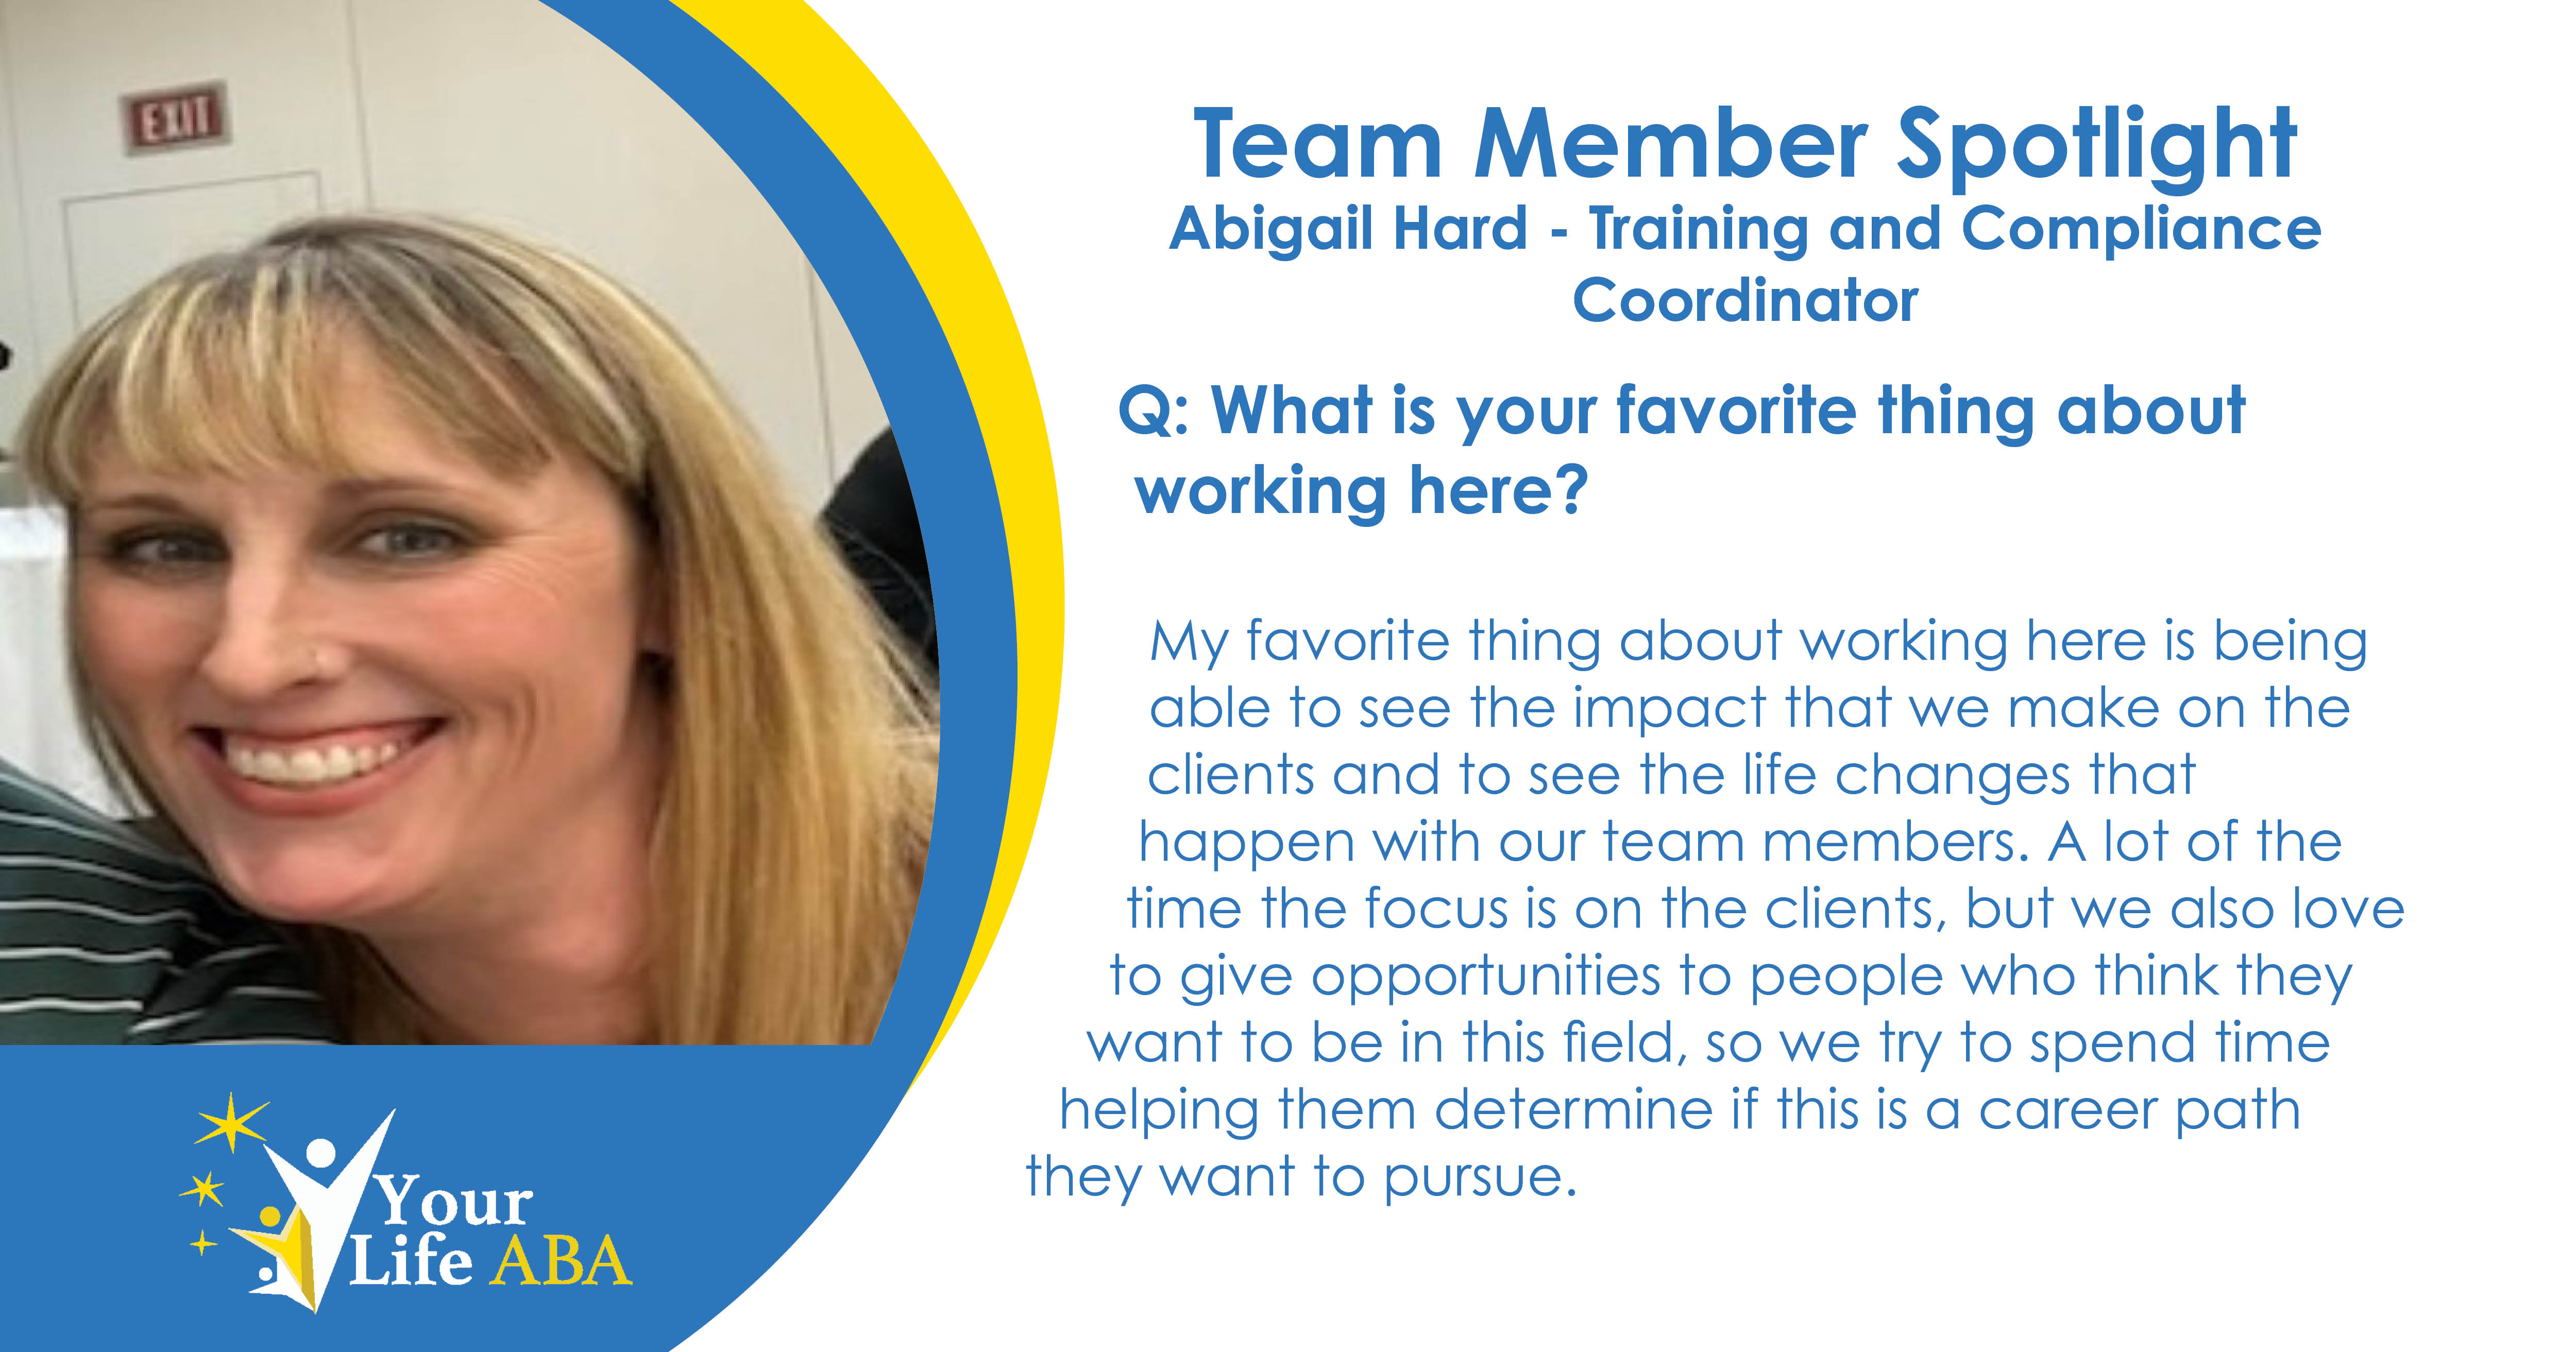 Team Member Spotlight: Abigail Hard - Training and Compliance Coordinator